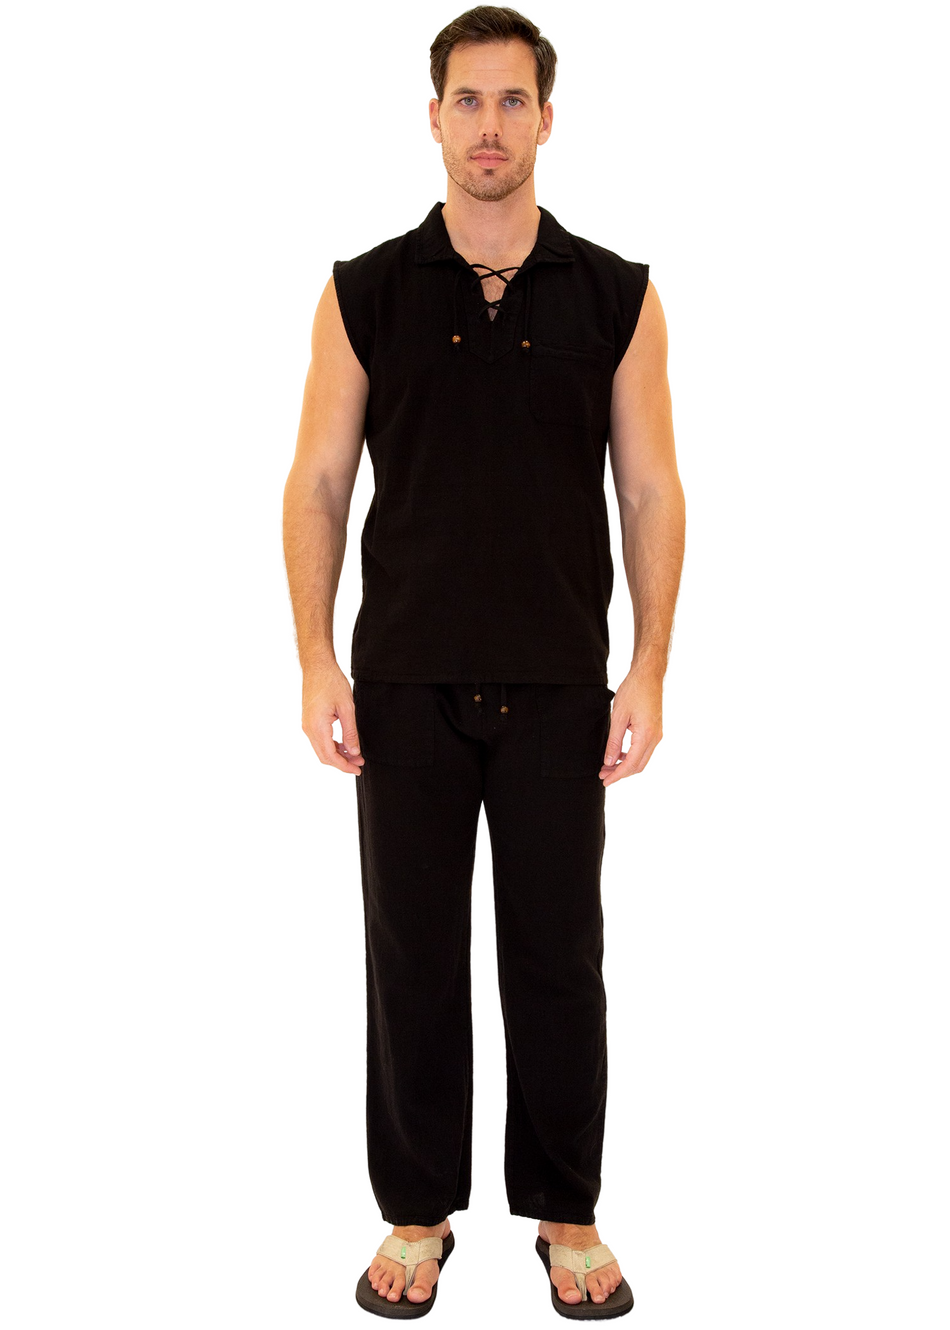 GZ1004 - Black Cotton Drawstring Pocket Sleeveless Shirt